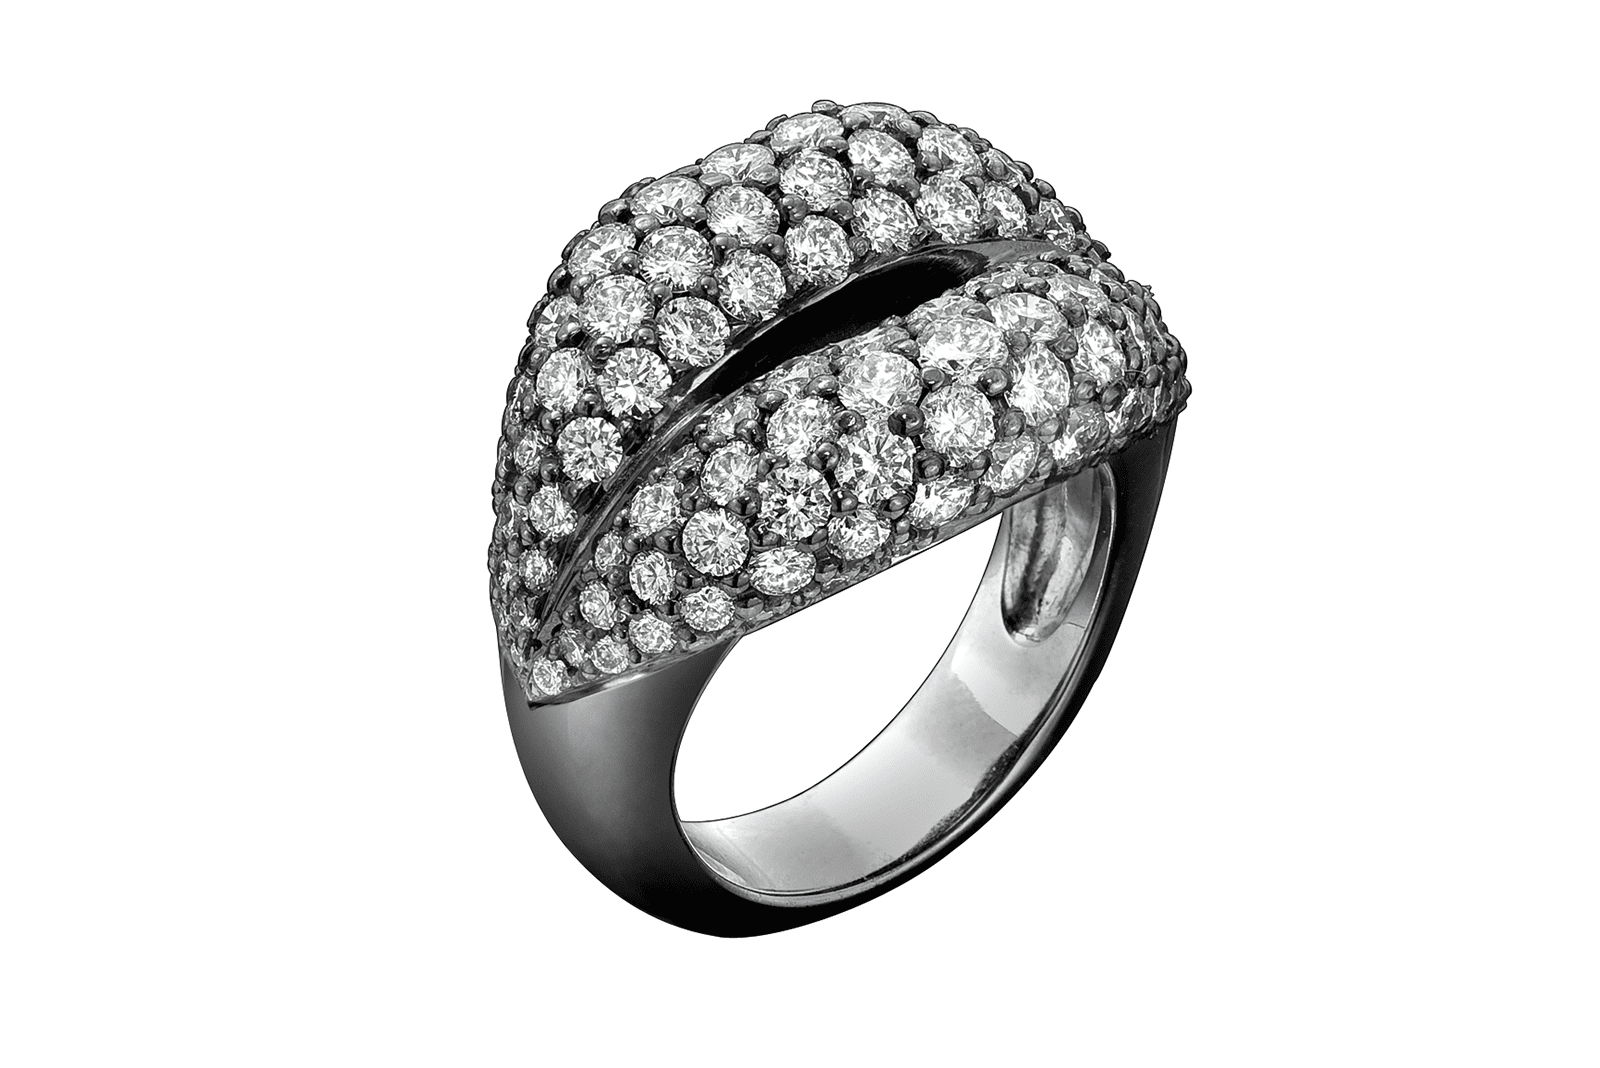 Hotlips Diamond Pave ring set with round brilliant cut diamonds in blackened 18kt white gold by Solange Azagury-Partridge